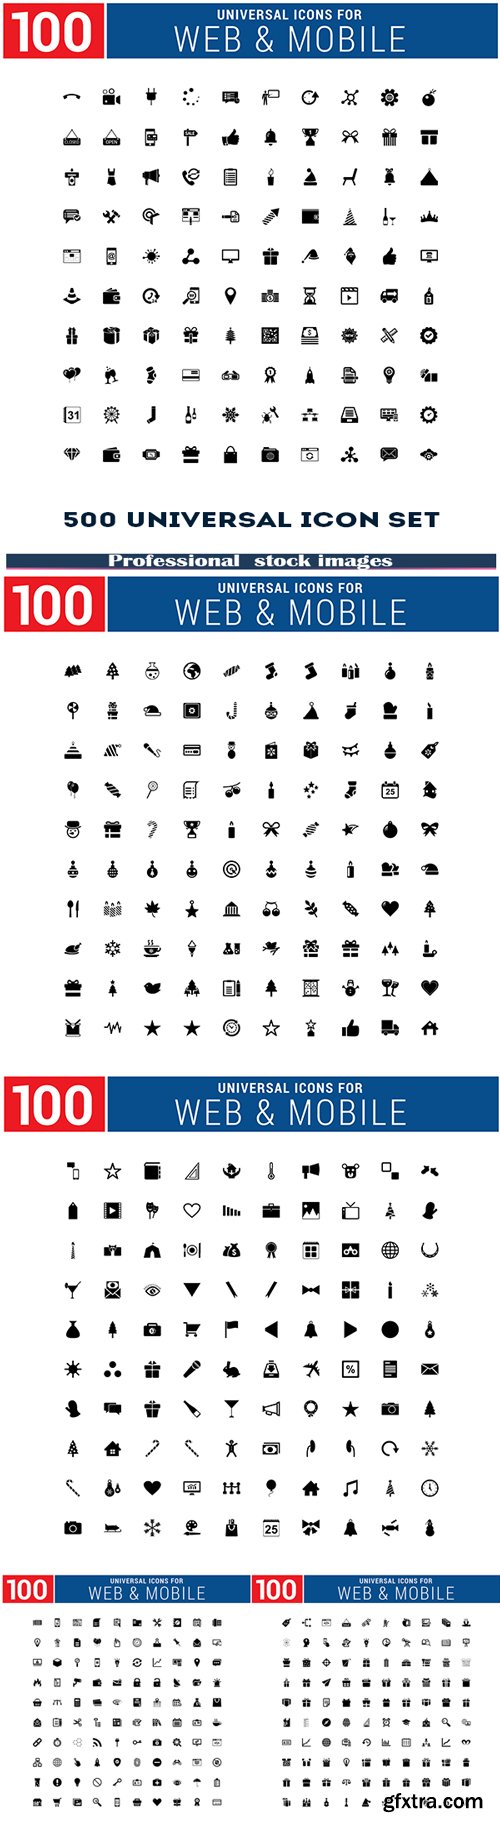 500 universal icon set